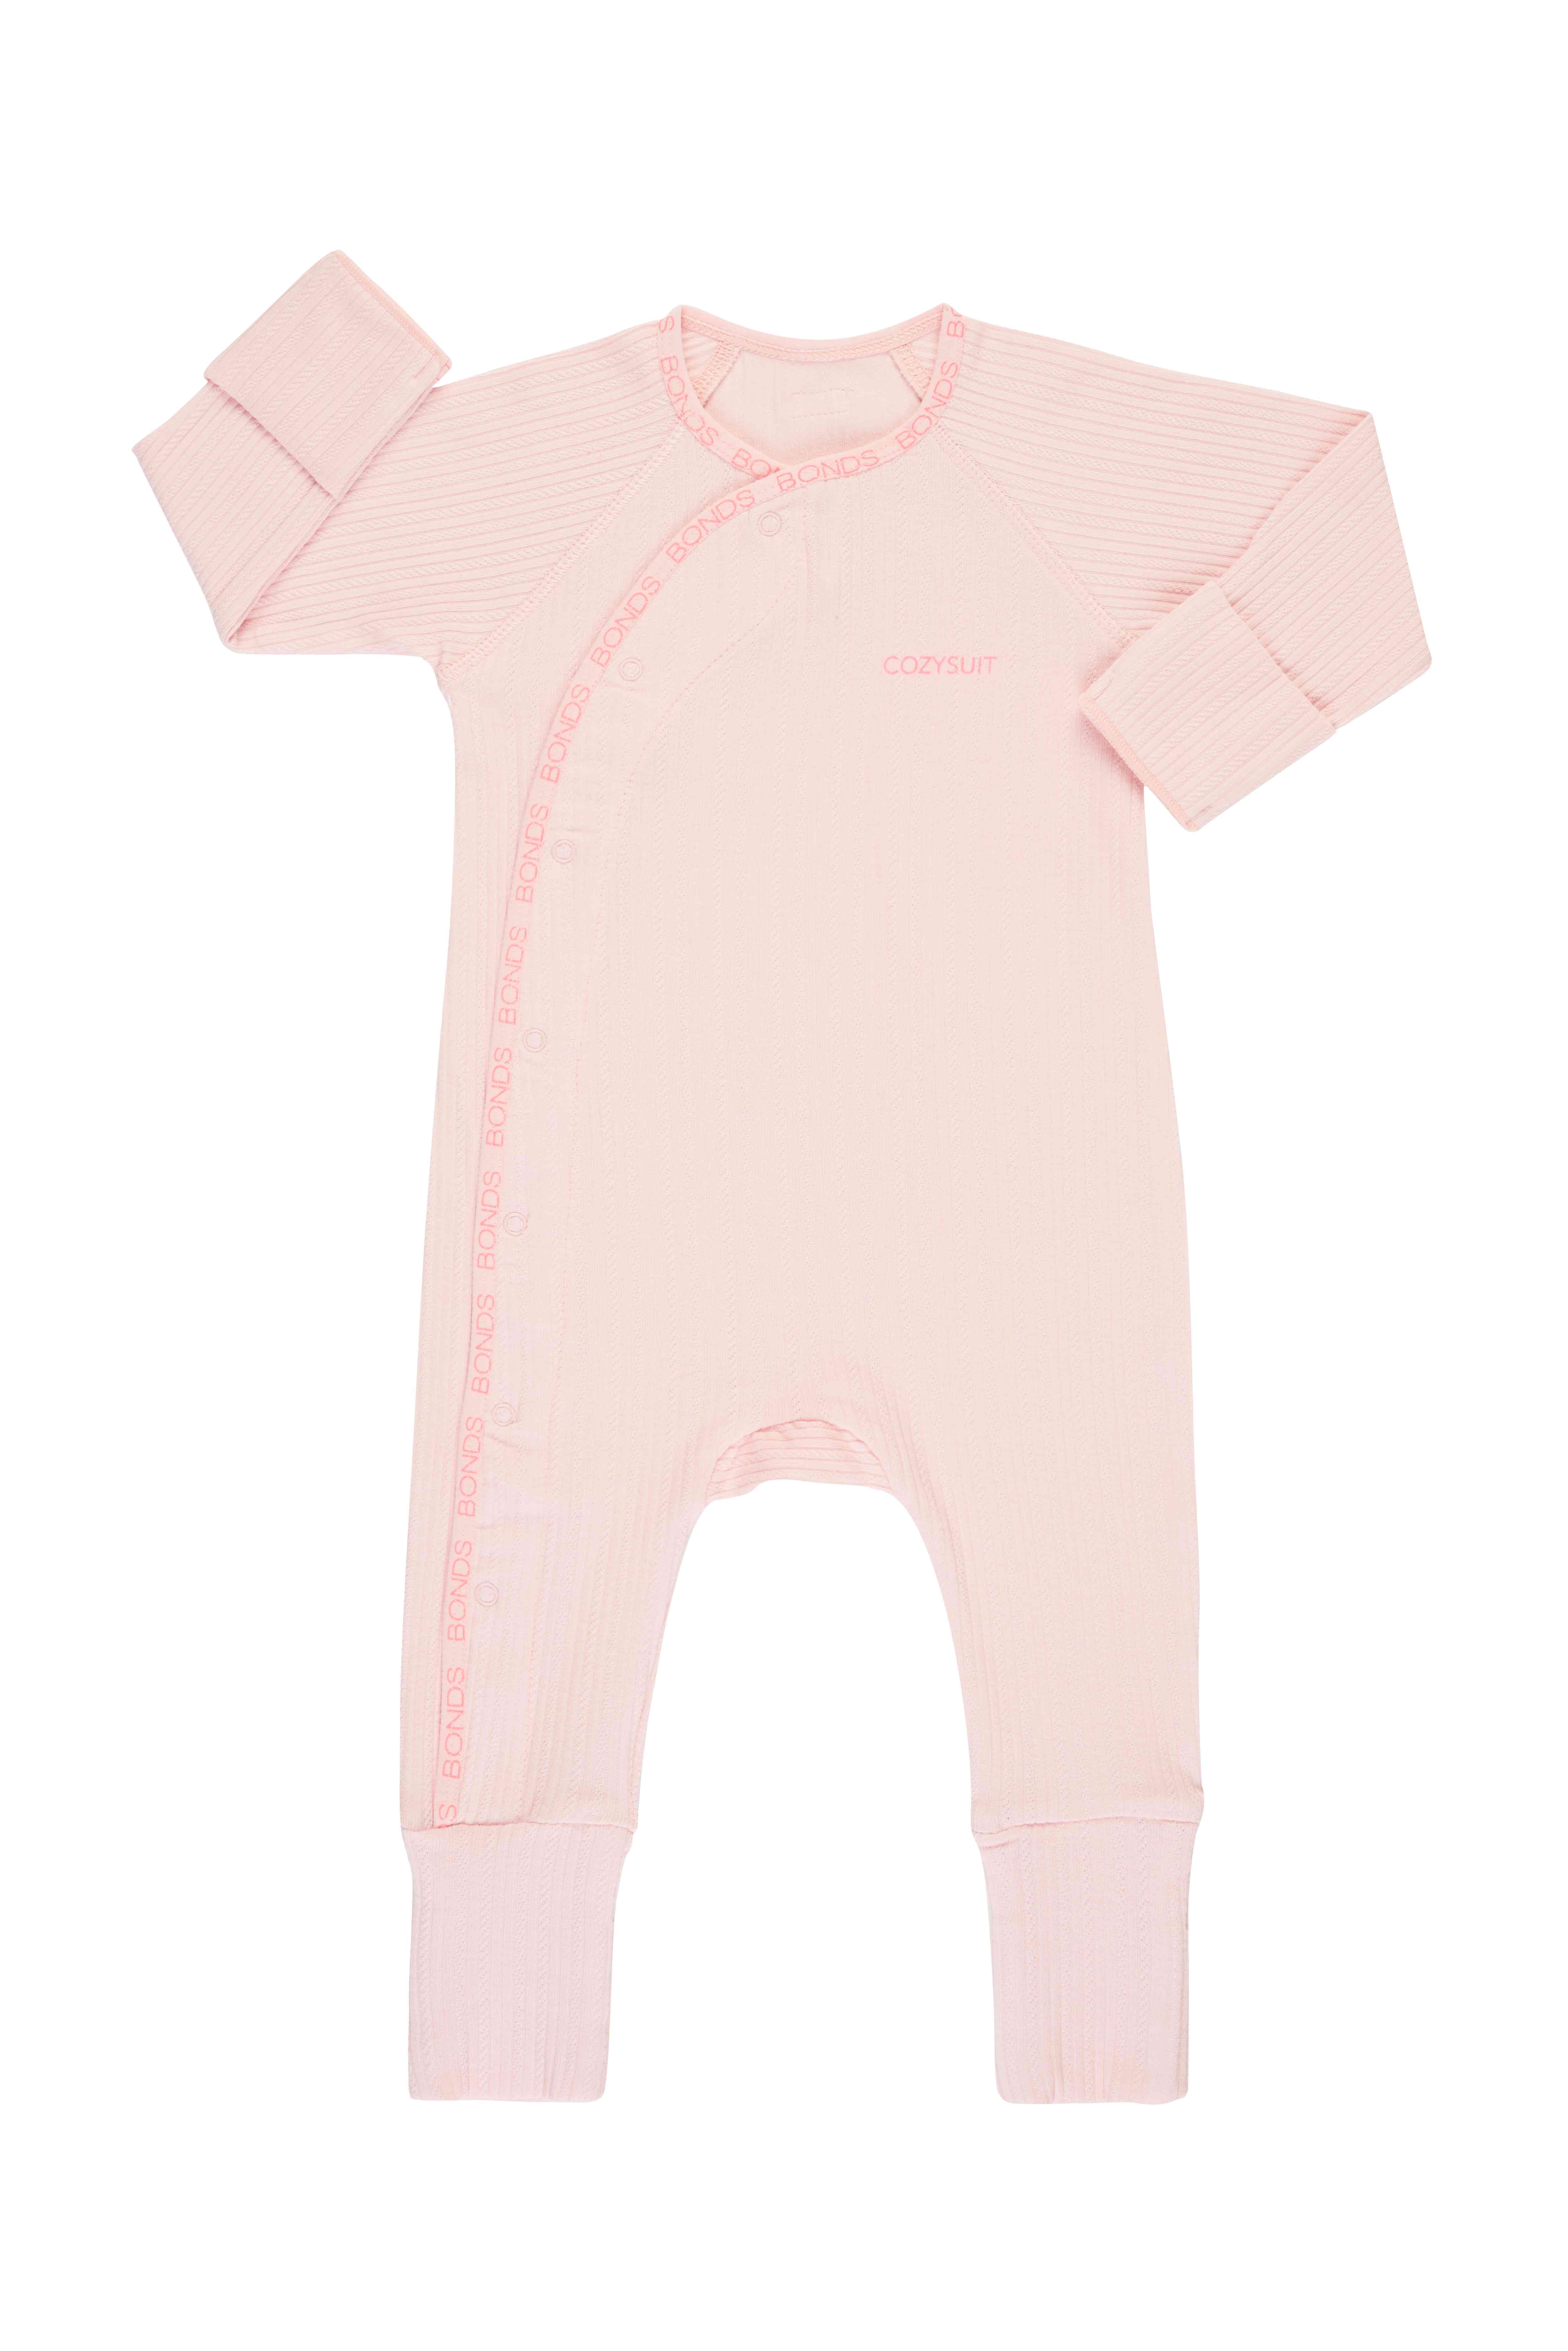 Bonds Pointelle Long Sleeve Bodysuit And Legging Set, Baby Baby Bodysuit